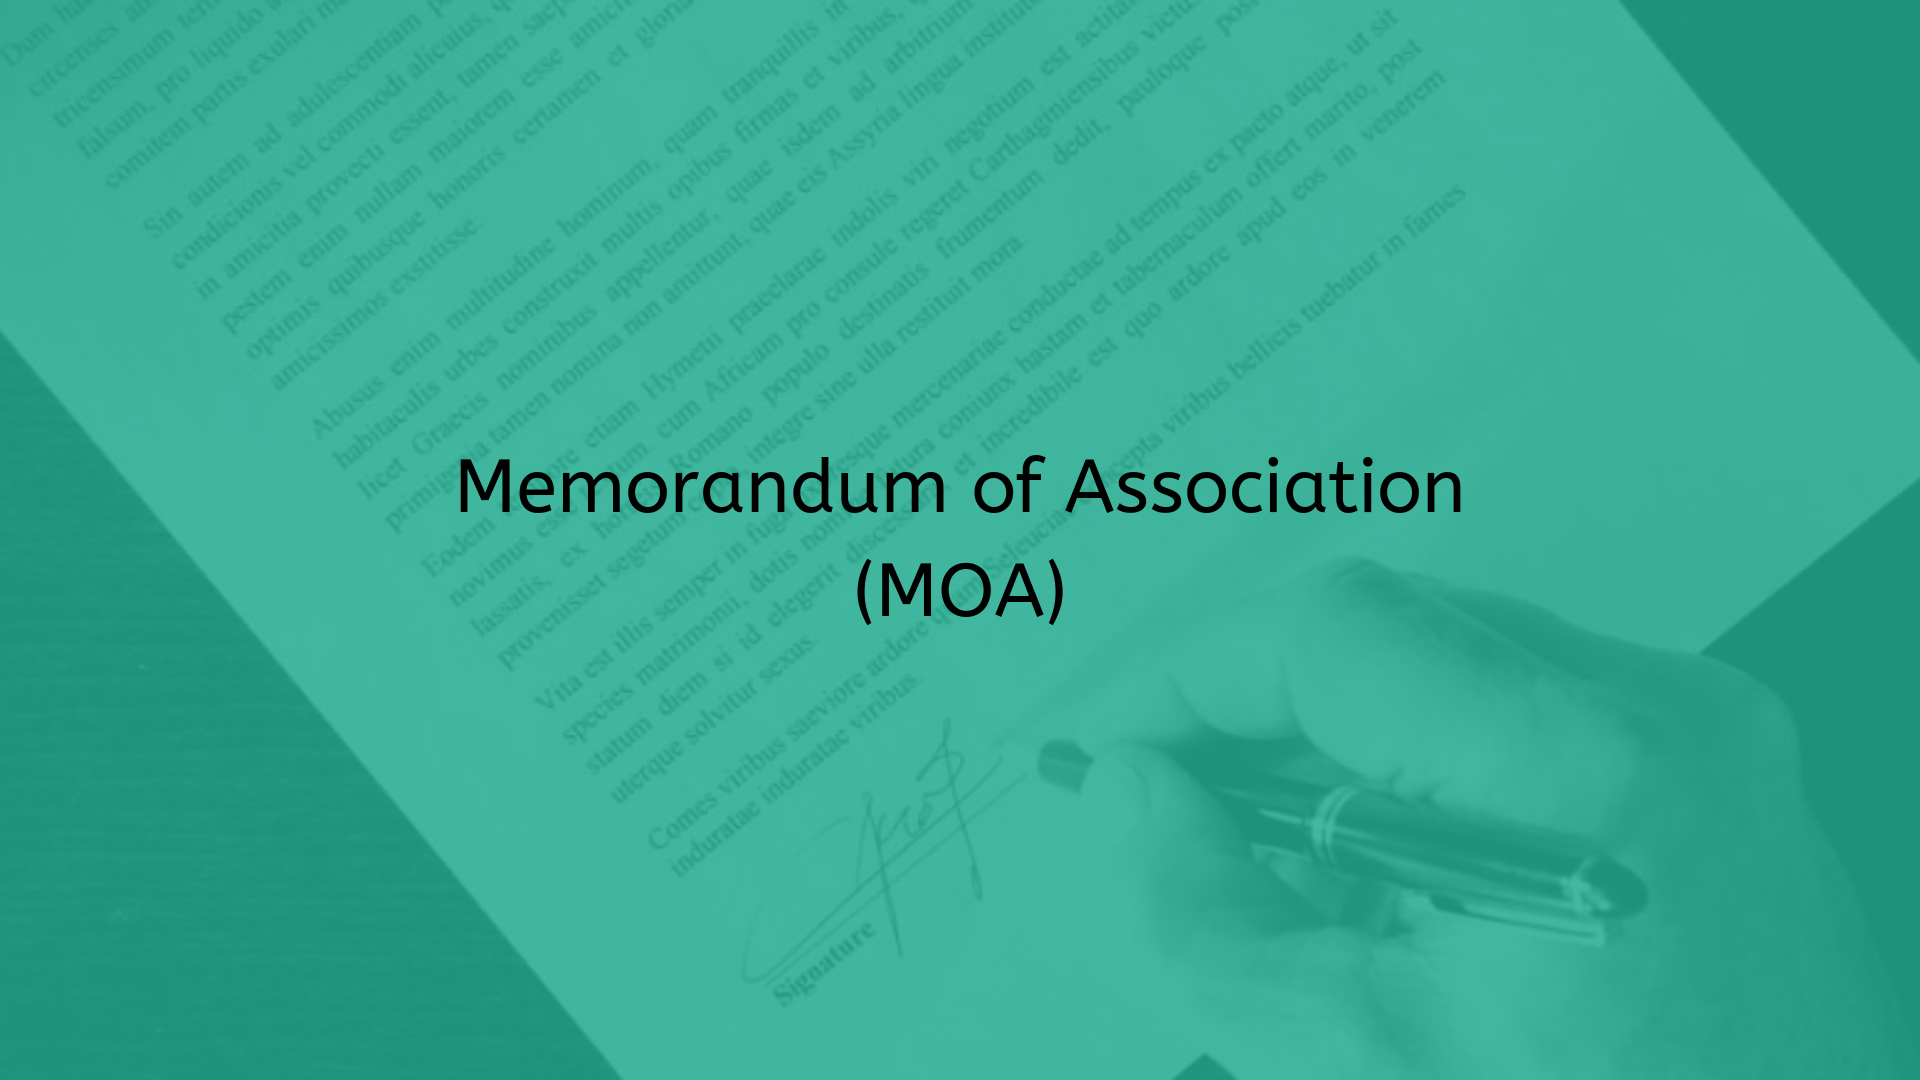 Memorandum of Association Under Section 4 of the Companies Act, 2013